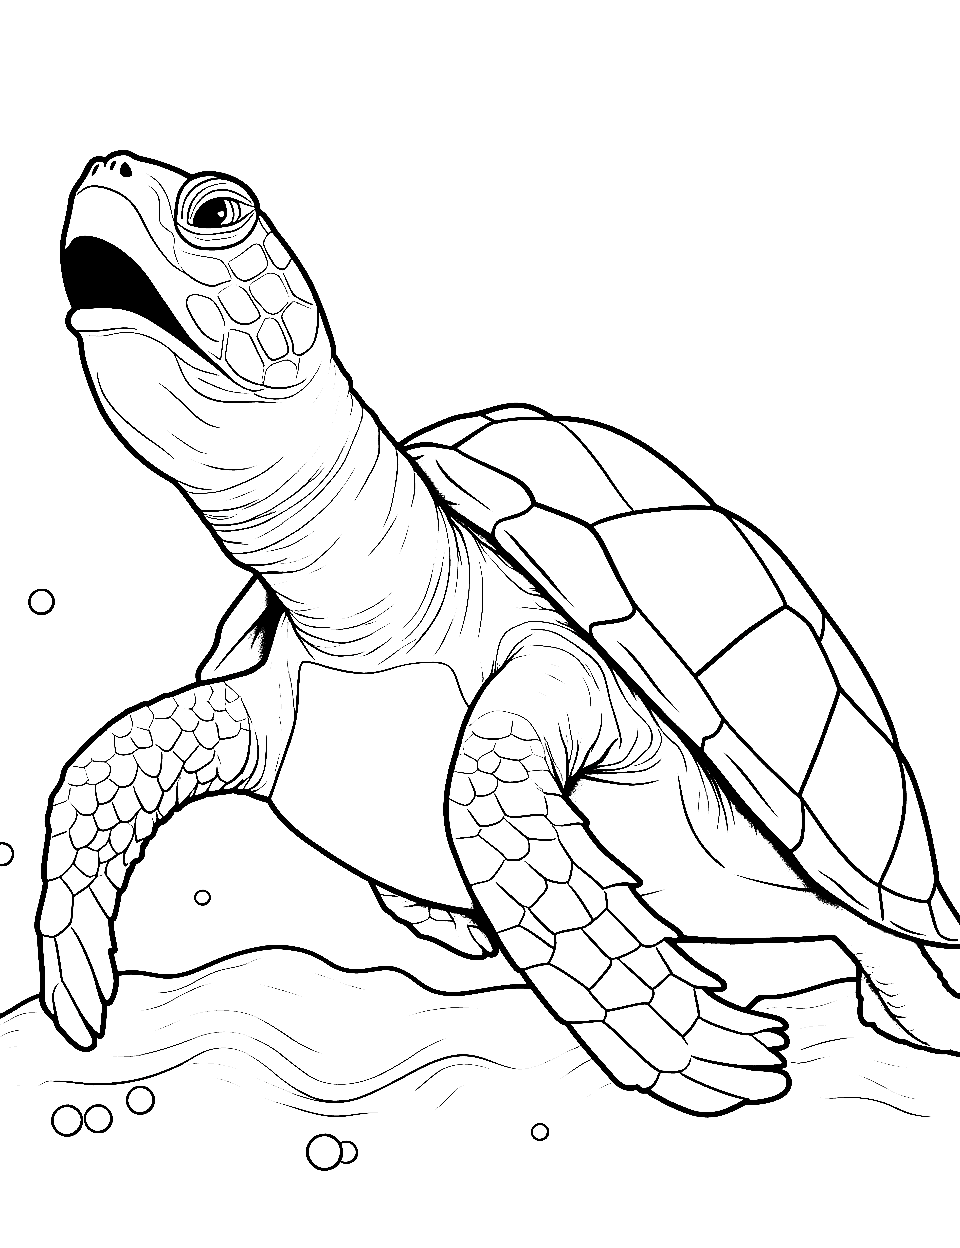 Turtle's Big Yawn Turtle Coloring Page - A turtle yawning wide, looking sleepy.